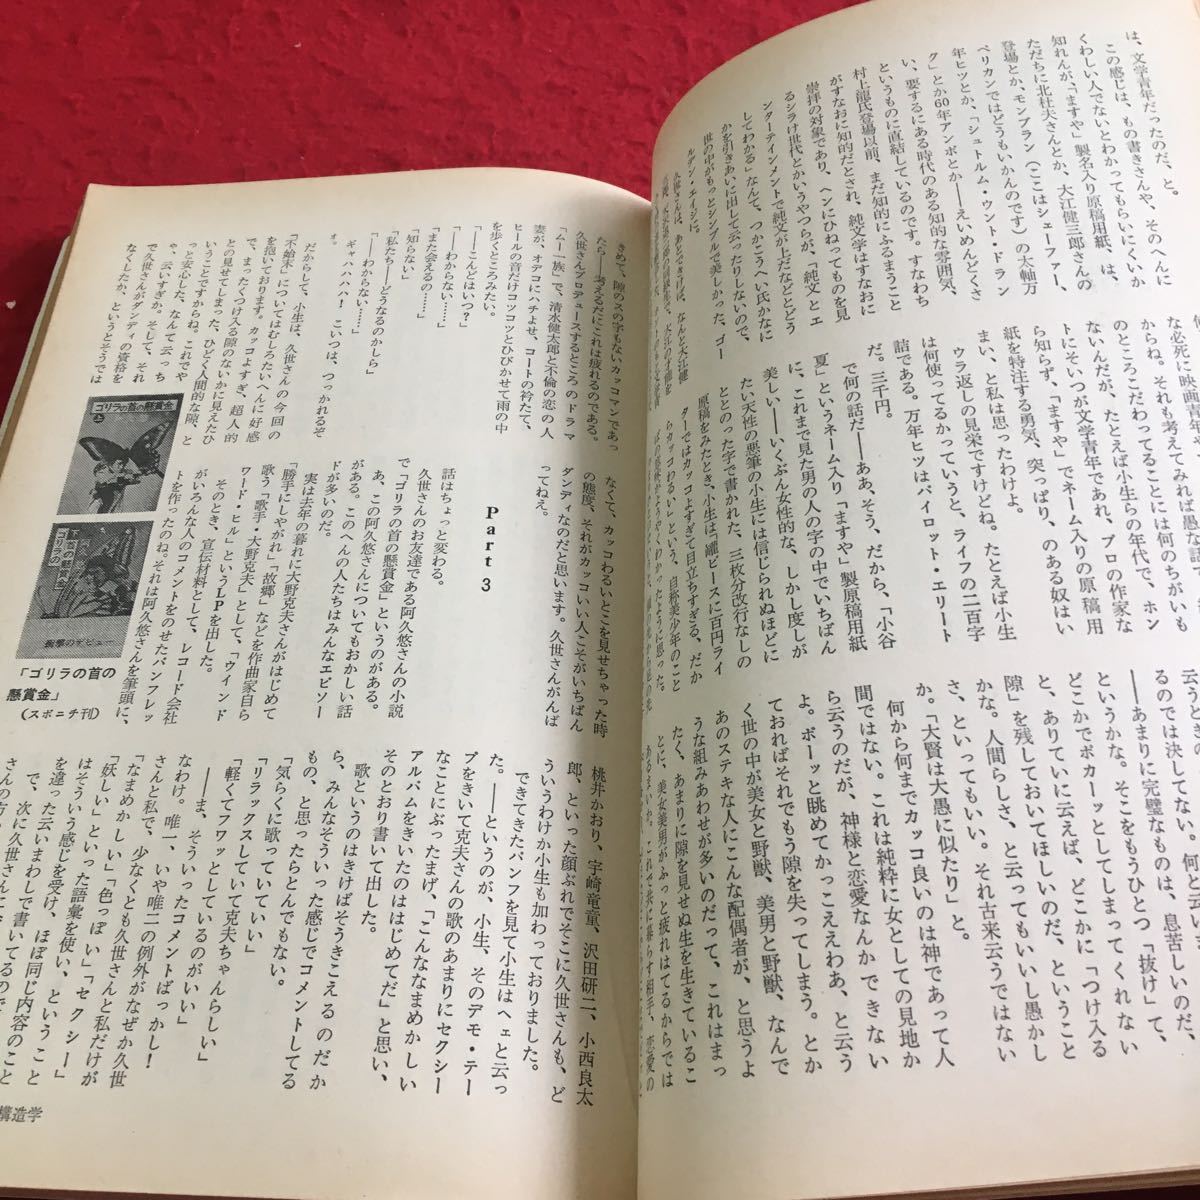 f-201※1 SFアドベンチャー 問題小説SPECIAL 第一日本SF作家登場…等 春季号 創刊号 1979 no.1_画像5